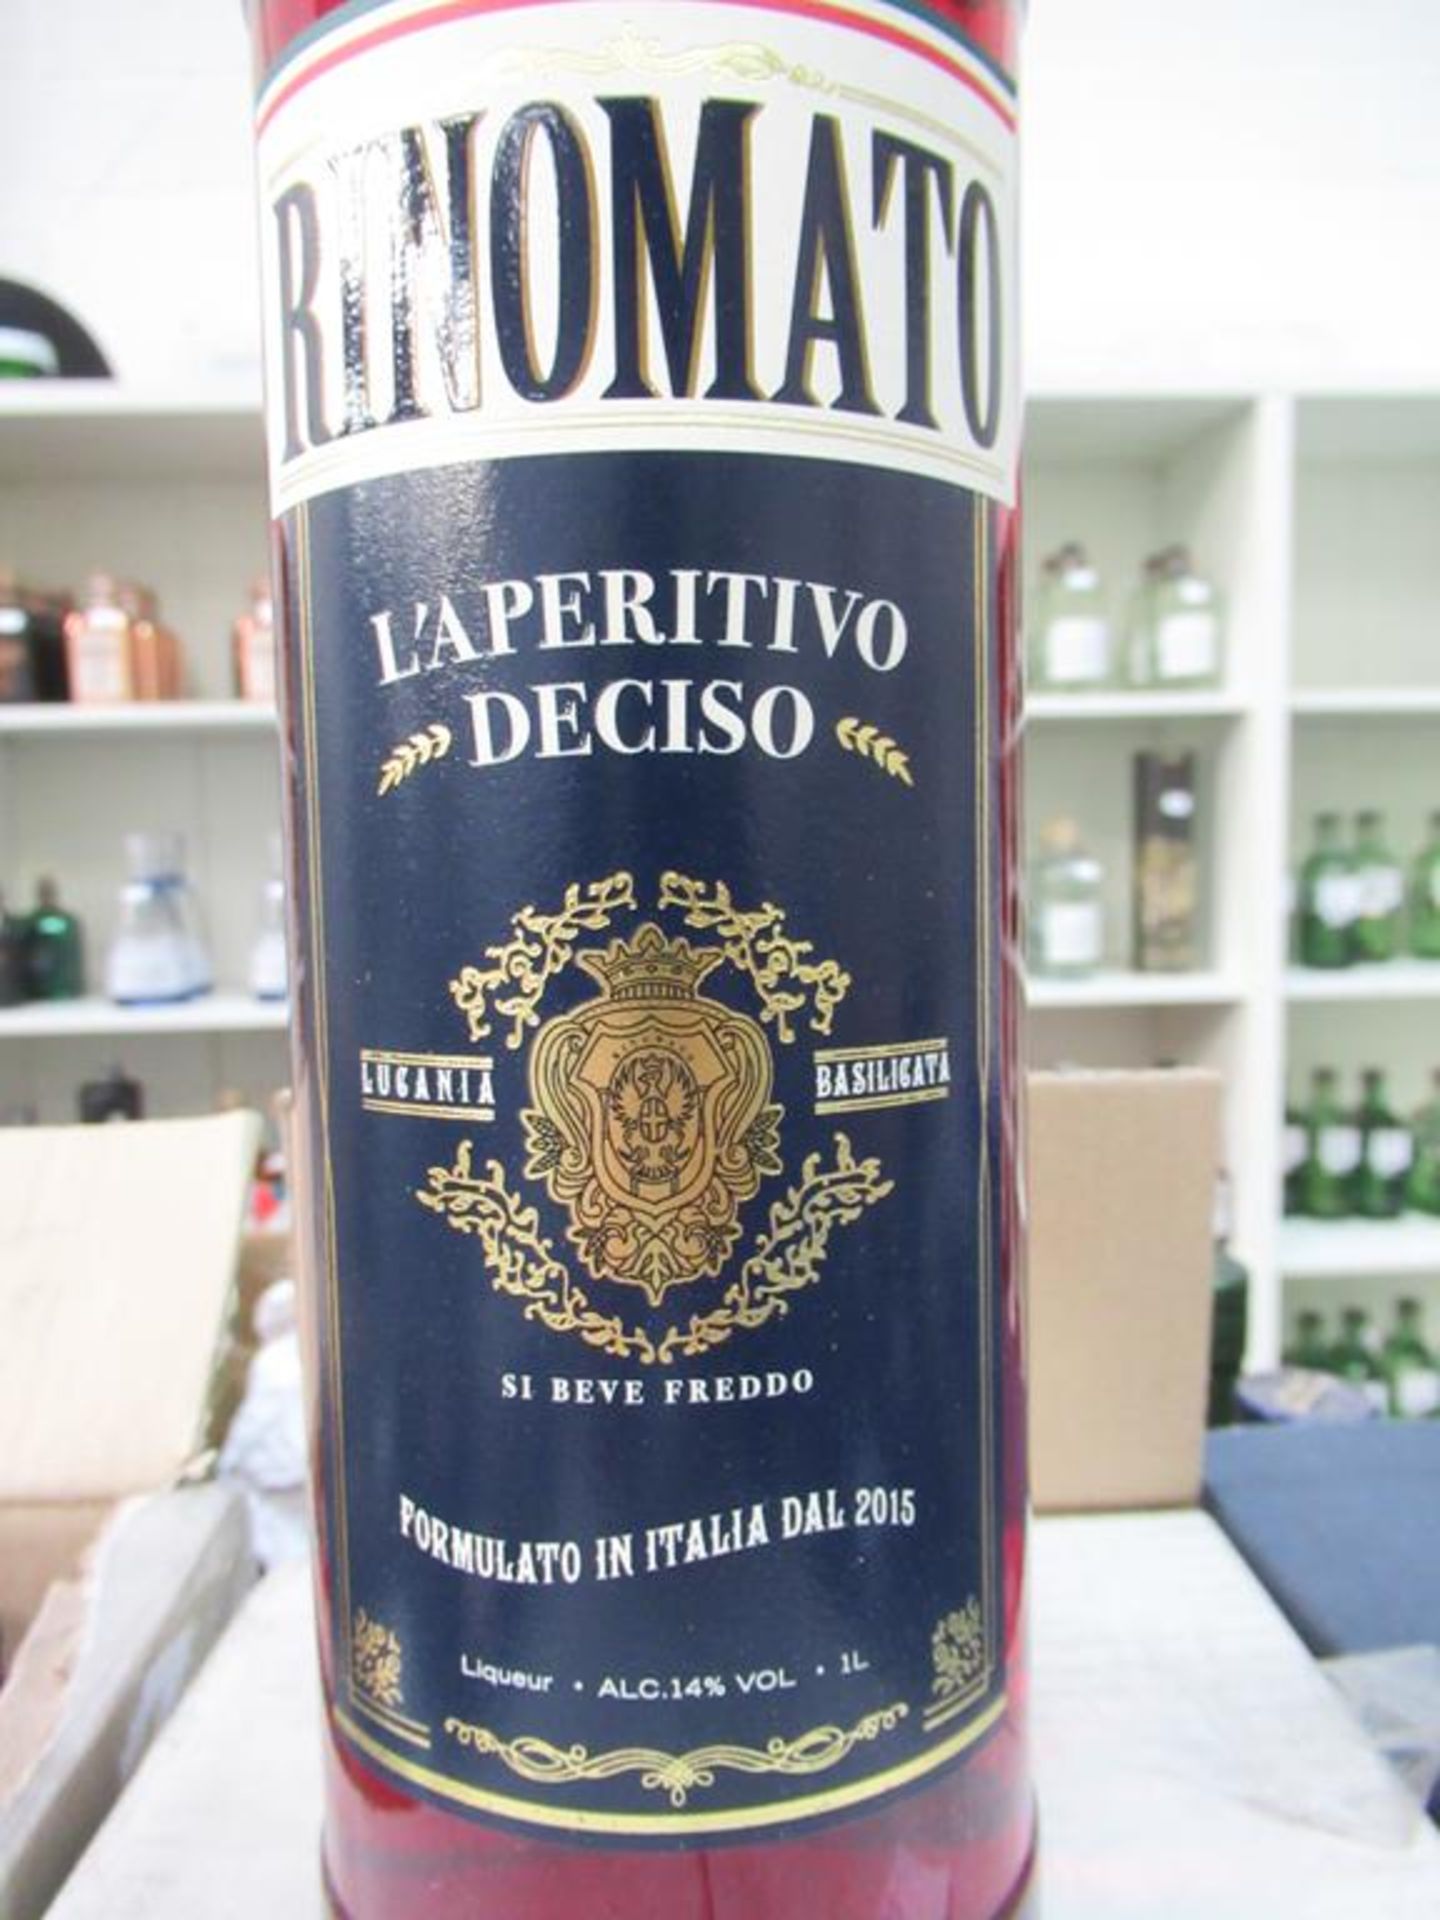 6 x bottles of Rinomato 'L'Aperitivo Deciso' - Image 2 of 4